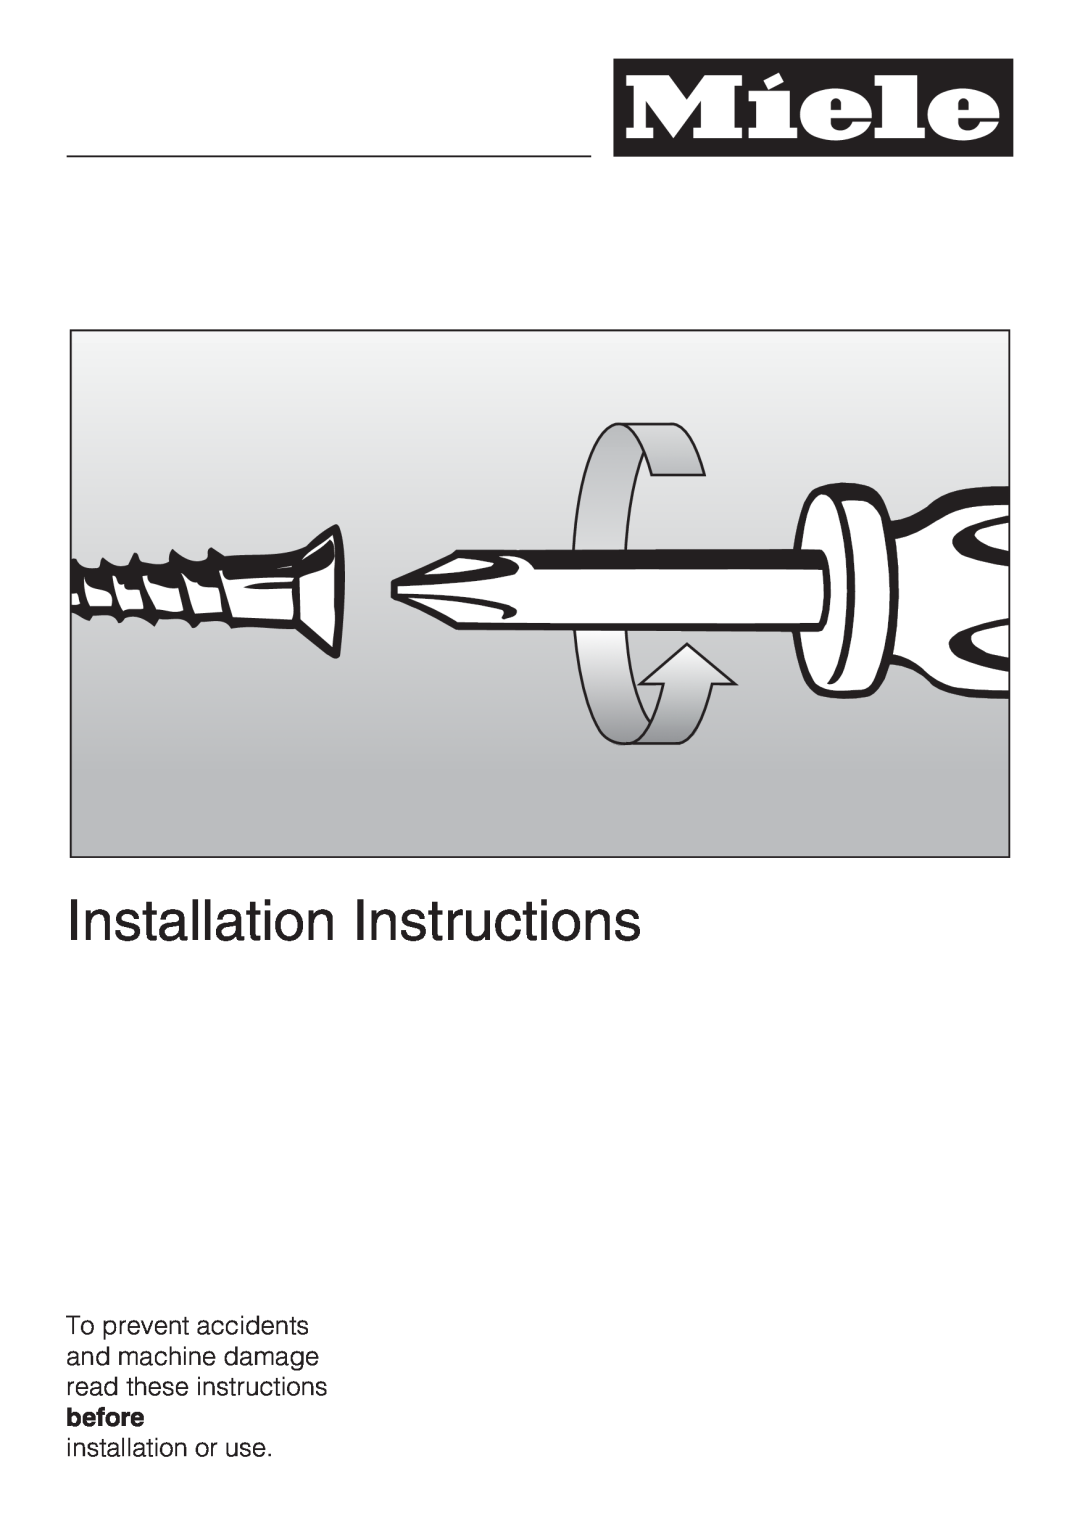 Miele KM 5753, KM 5758 installation instructions Installation Instructions, installation or use 